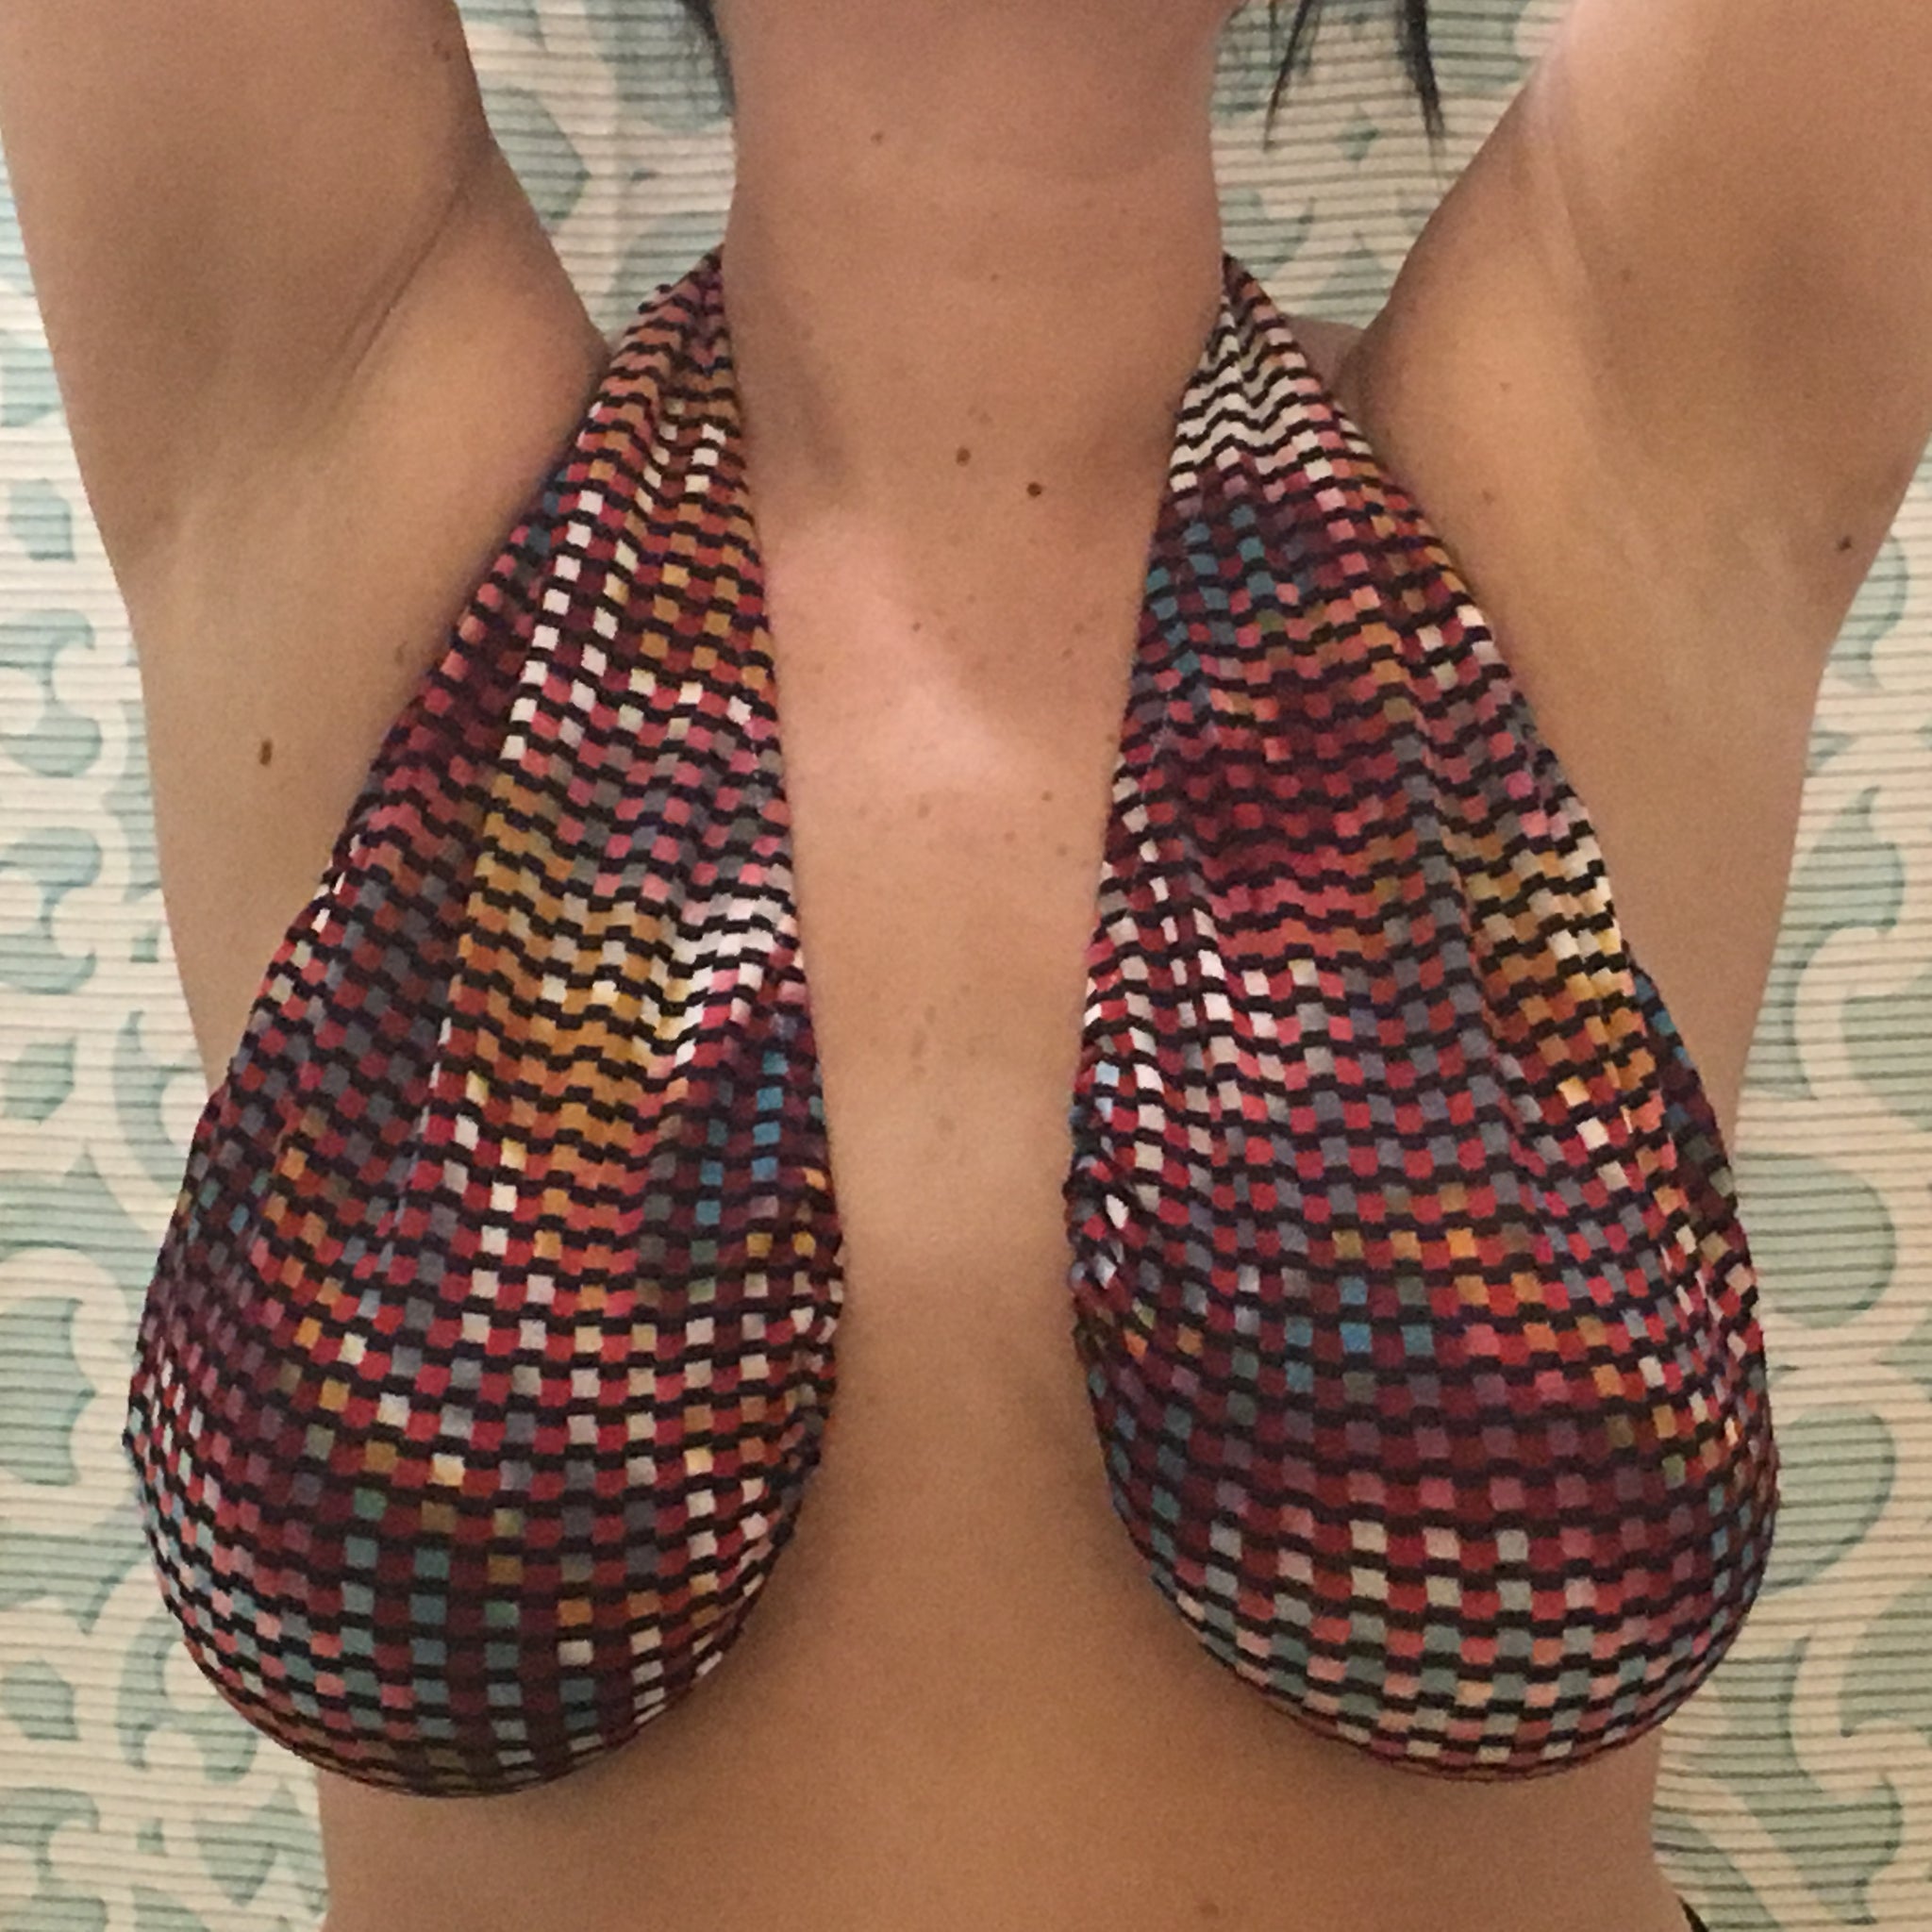 Tata Bra - Boulder Holder-Gifts for Her - Festival Clothes-Bralette - RACK ROMPER - Boob Towel